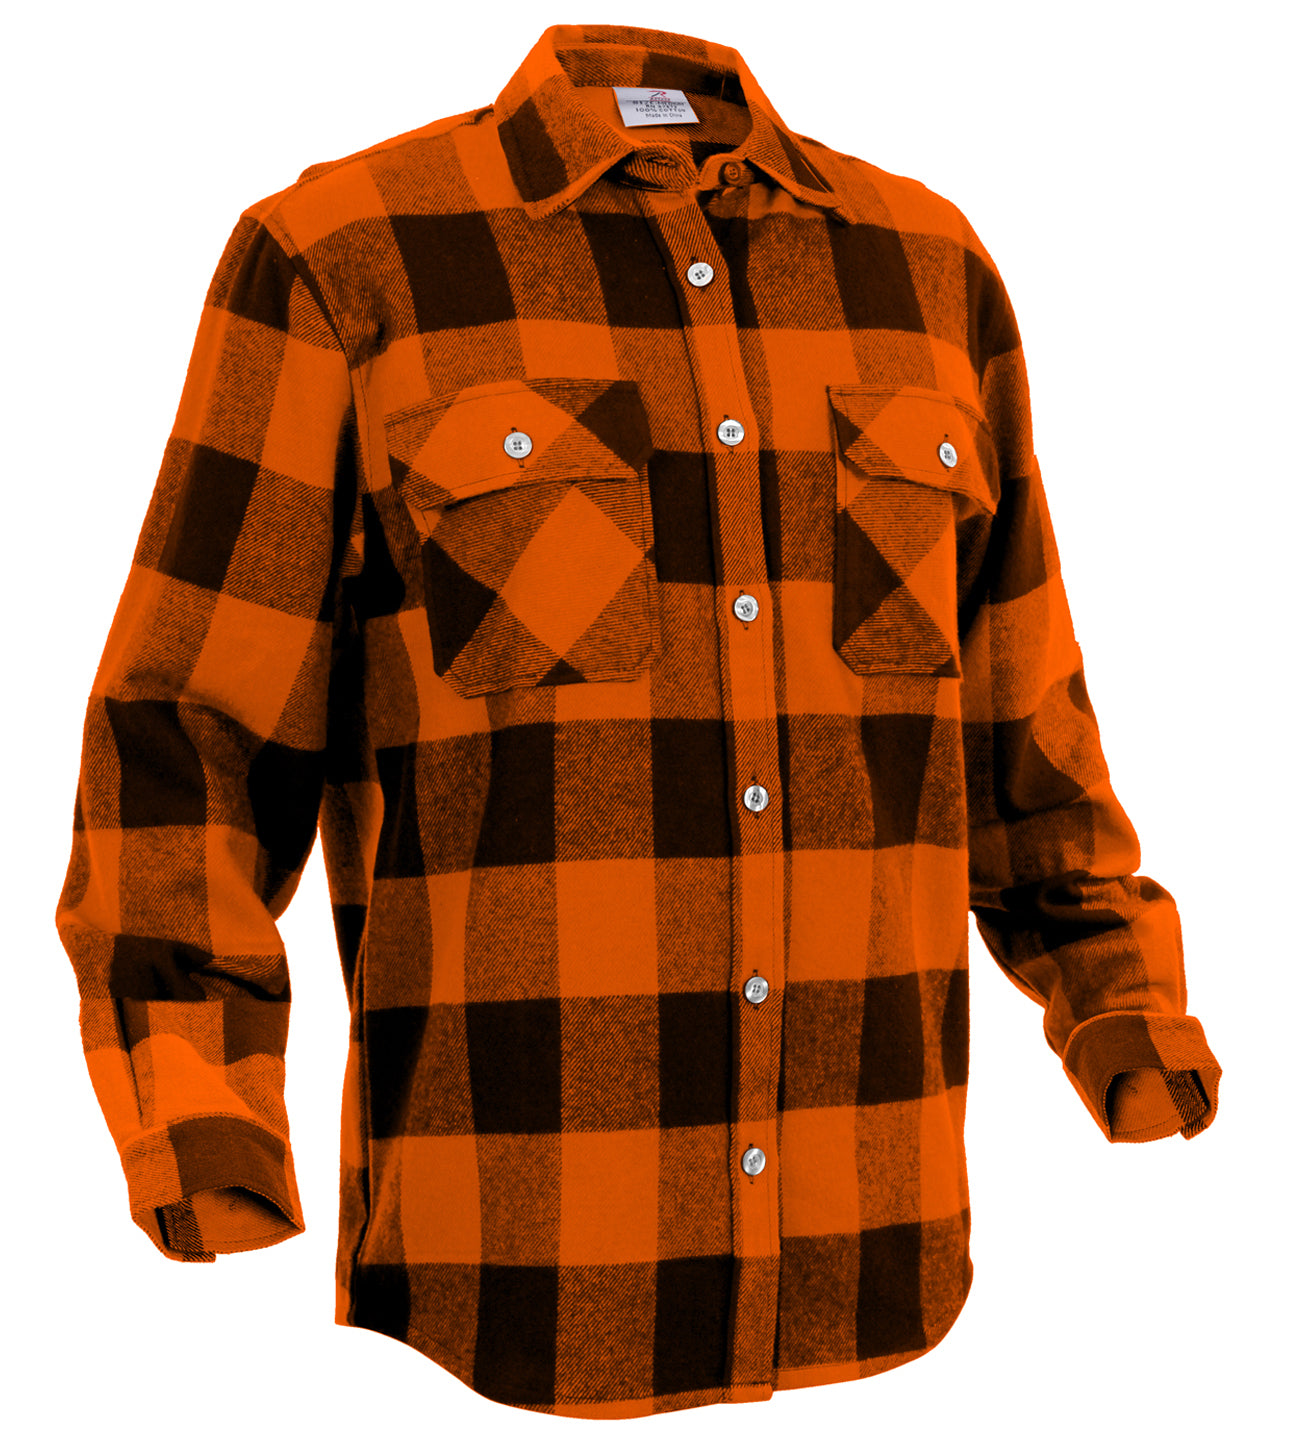 Mens Orange and Black Buffalo Plaid Flannel Shirt - Cotton Extra Heavyweight Top